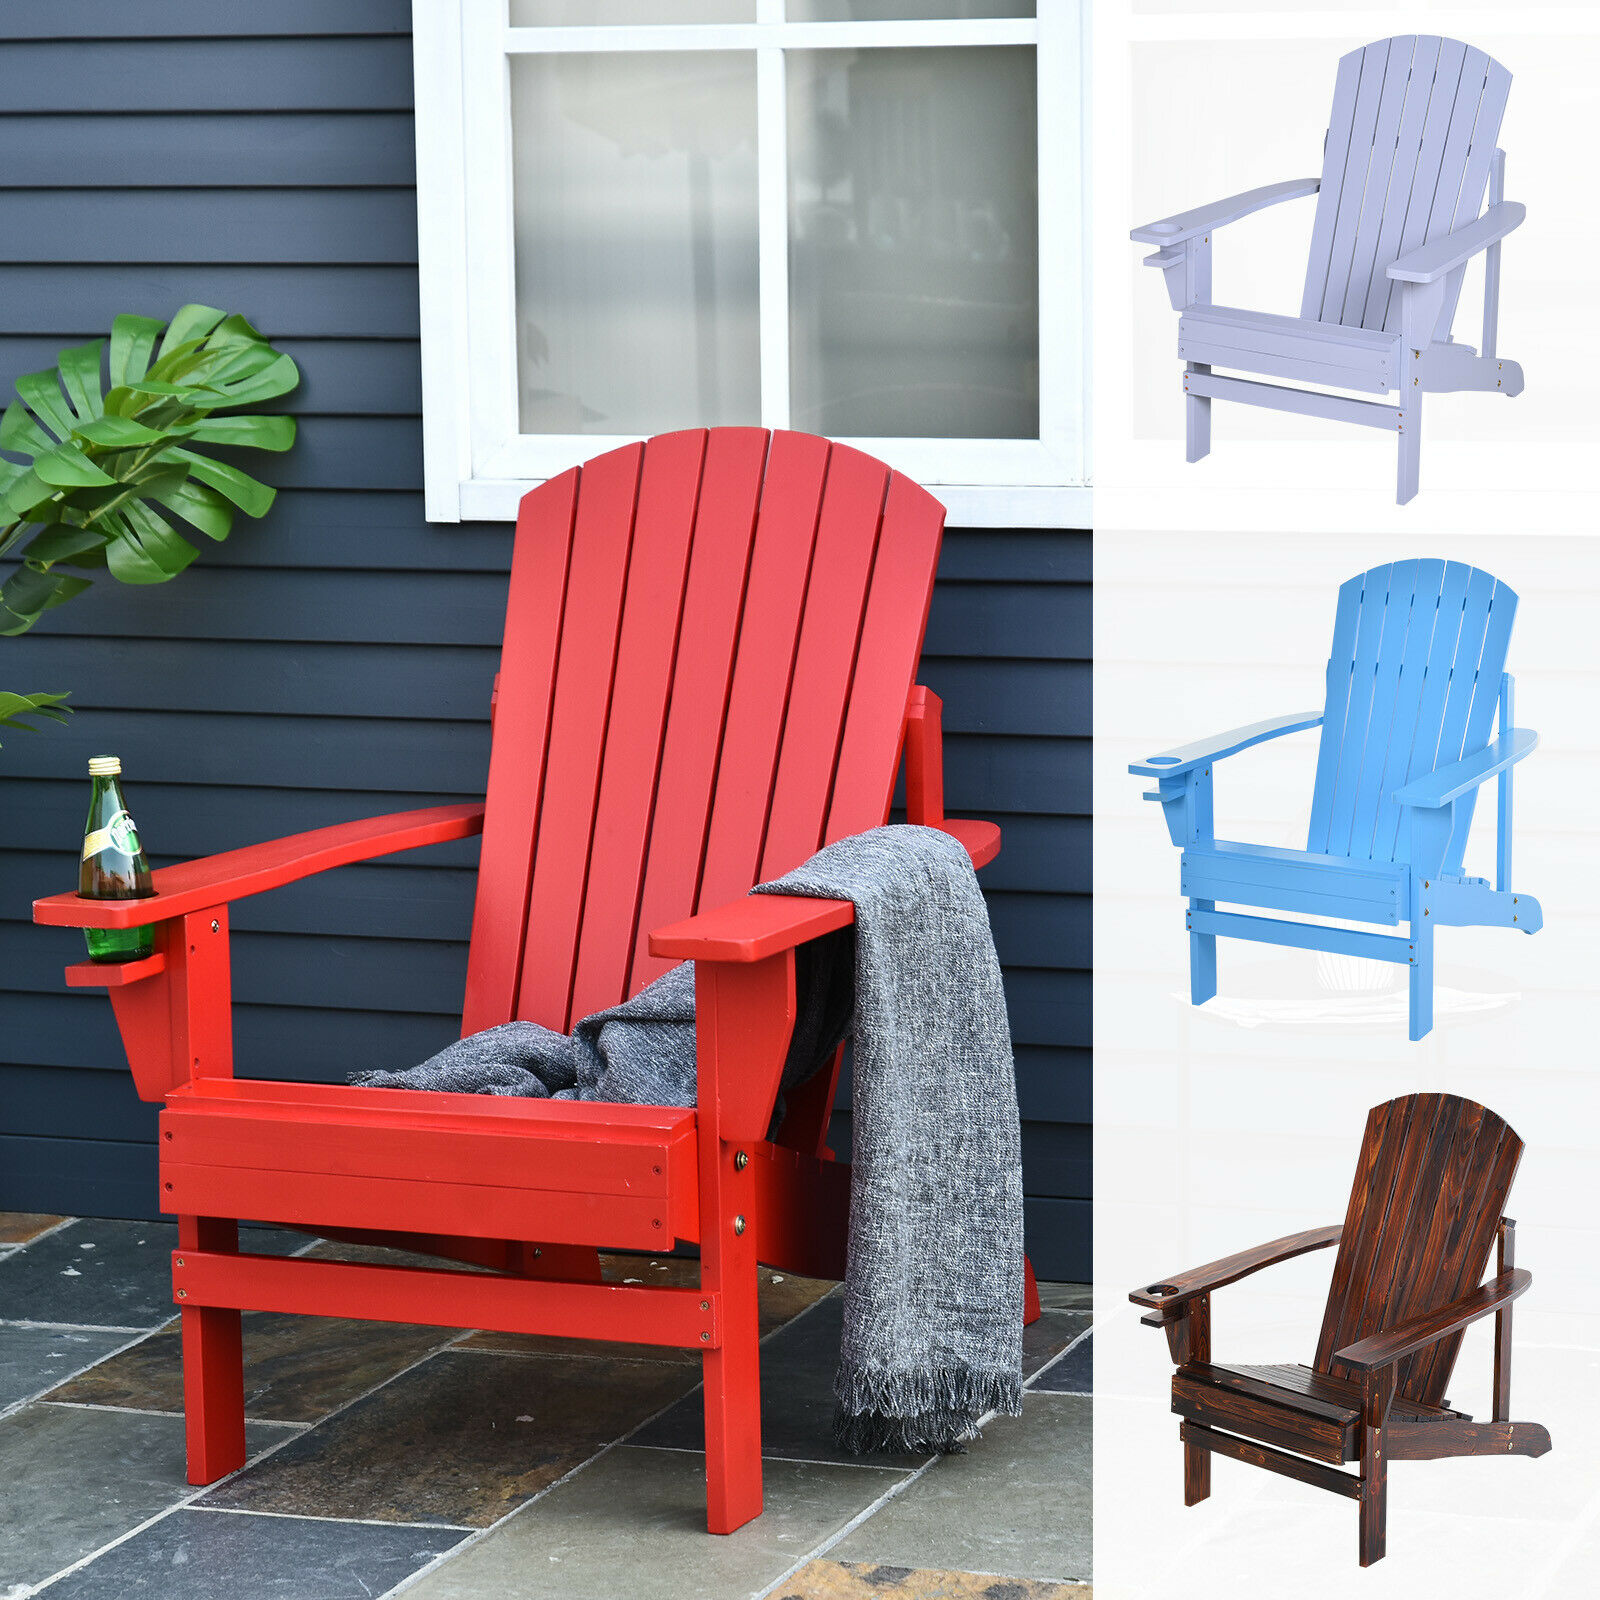 Outdoor Patio Wooden Adirondack Chair Lounge w/Cup Holder Deck Garden Furniture